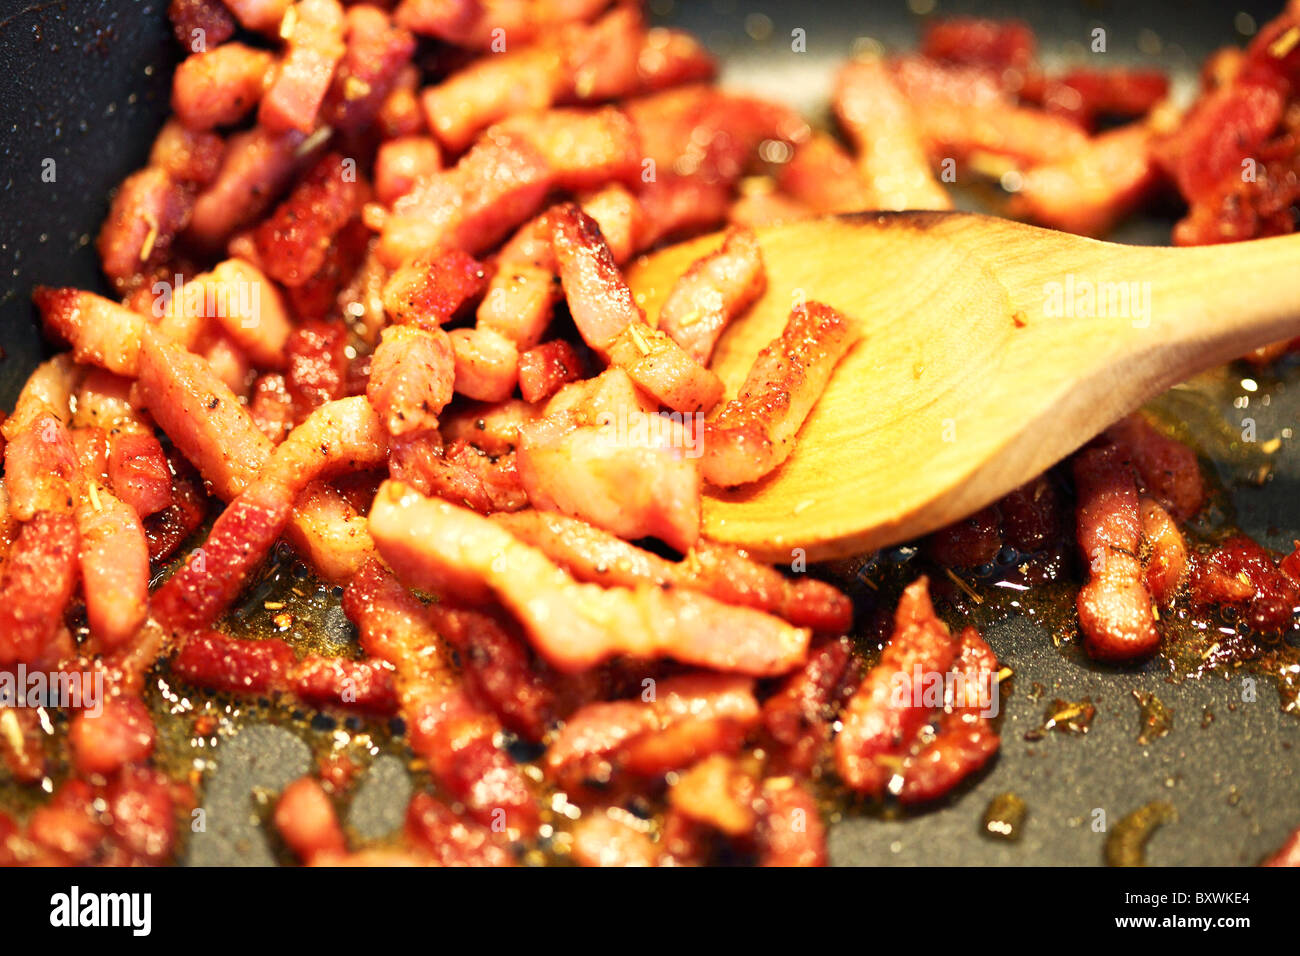 Bacon strips frying in a pan. Stock Photo